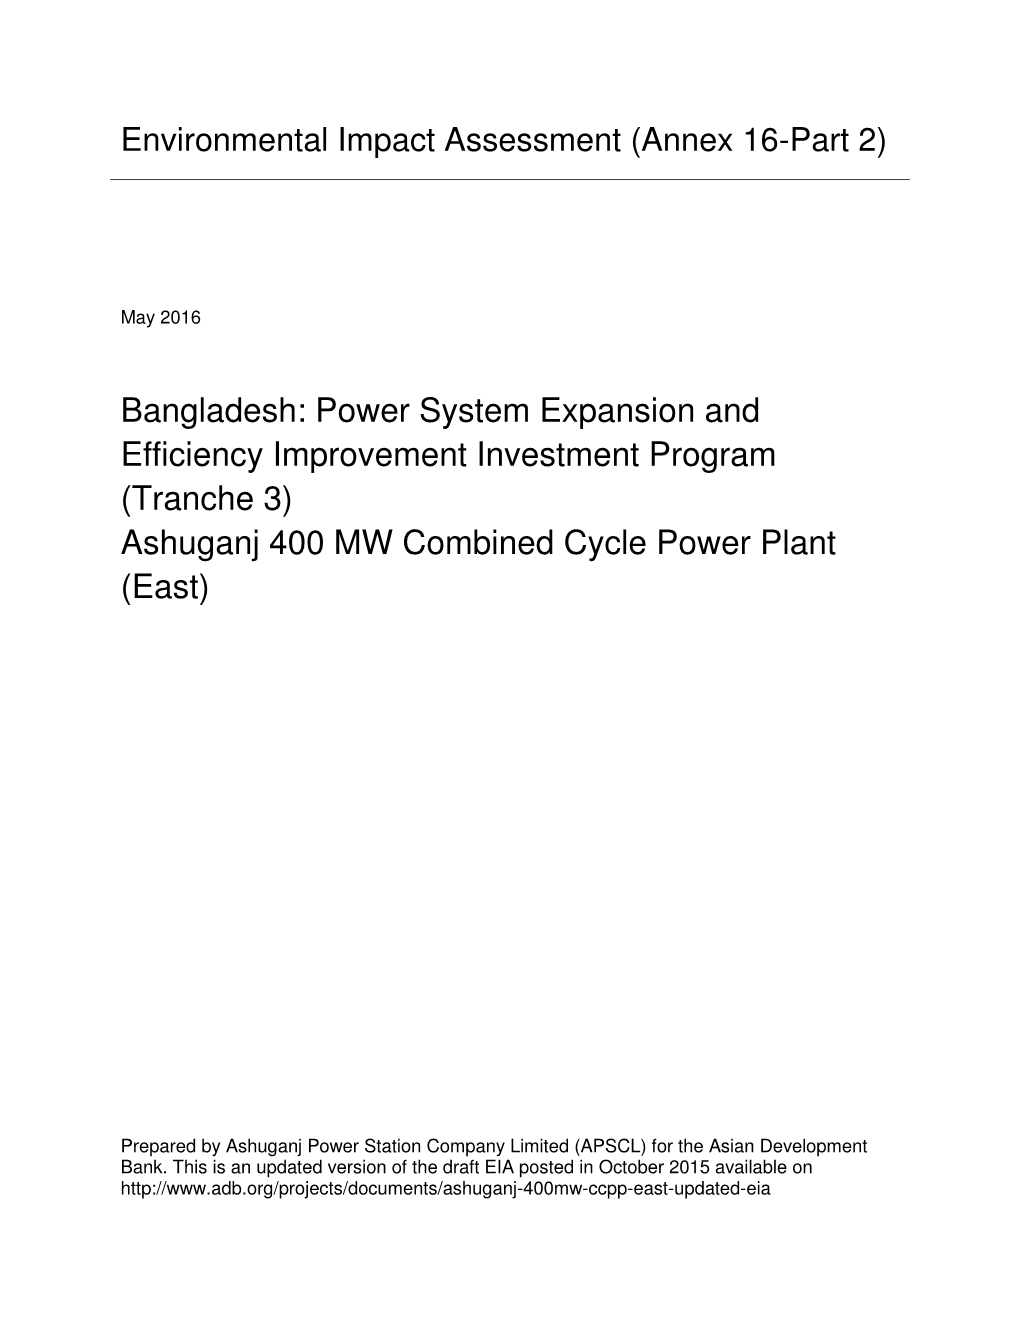 Ashuganj 400 MW Combined Cycle Power Plant (East)